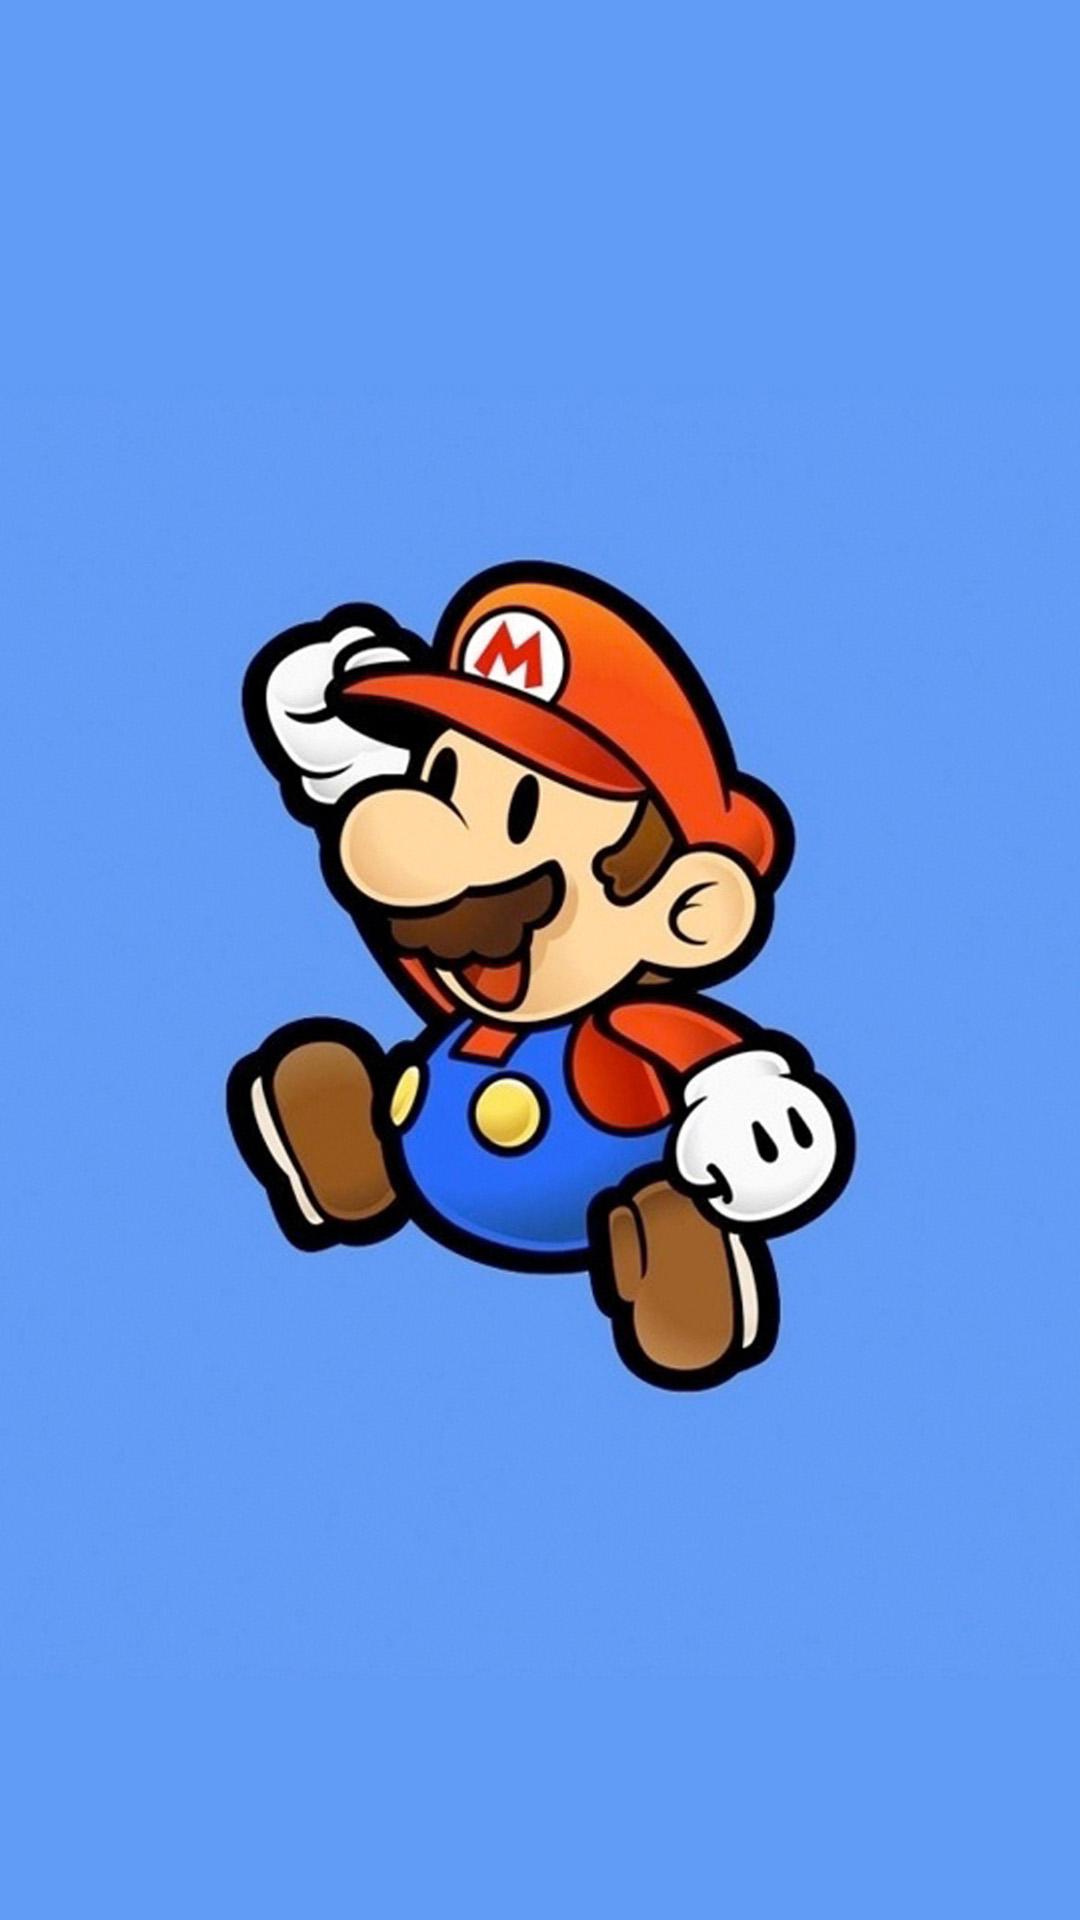 Paper Mario hình nền  Super Mario Bros hình nền 5431535  fanpop